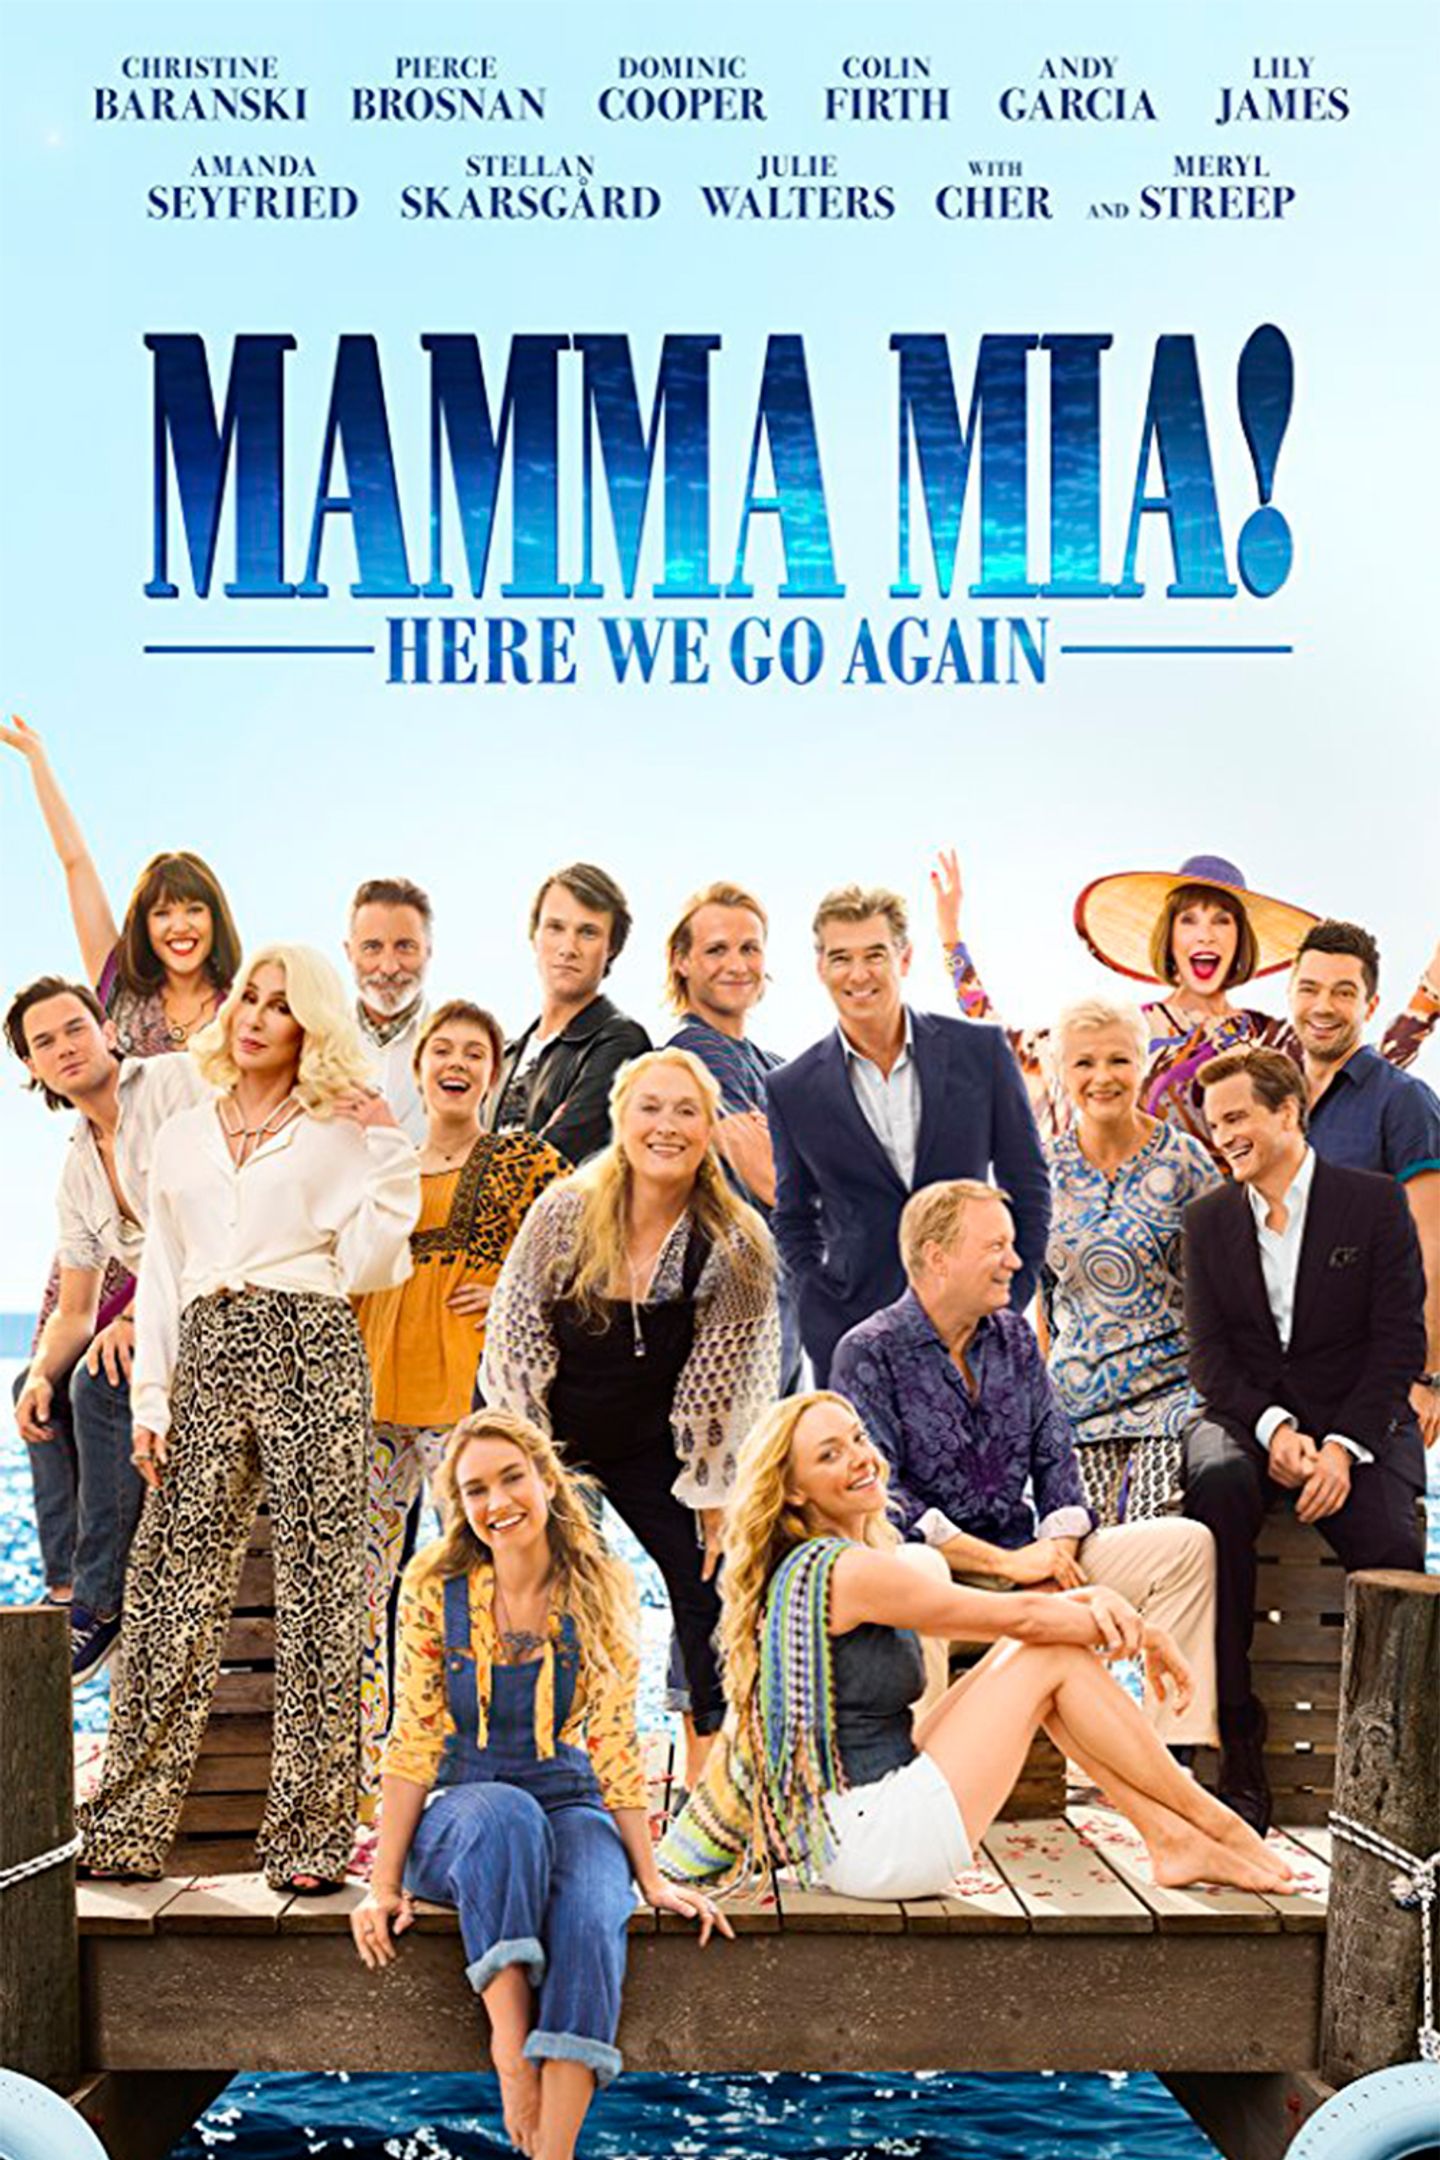 Plakat for 'Mamma Mia! Here We Go Again!'